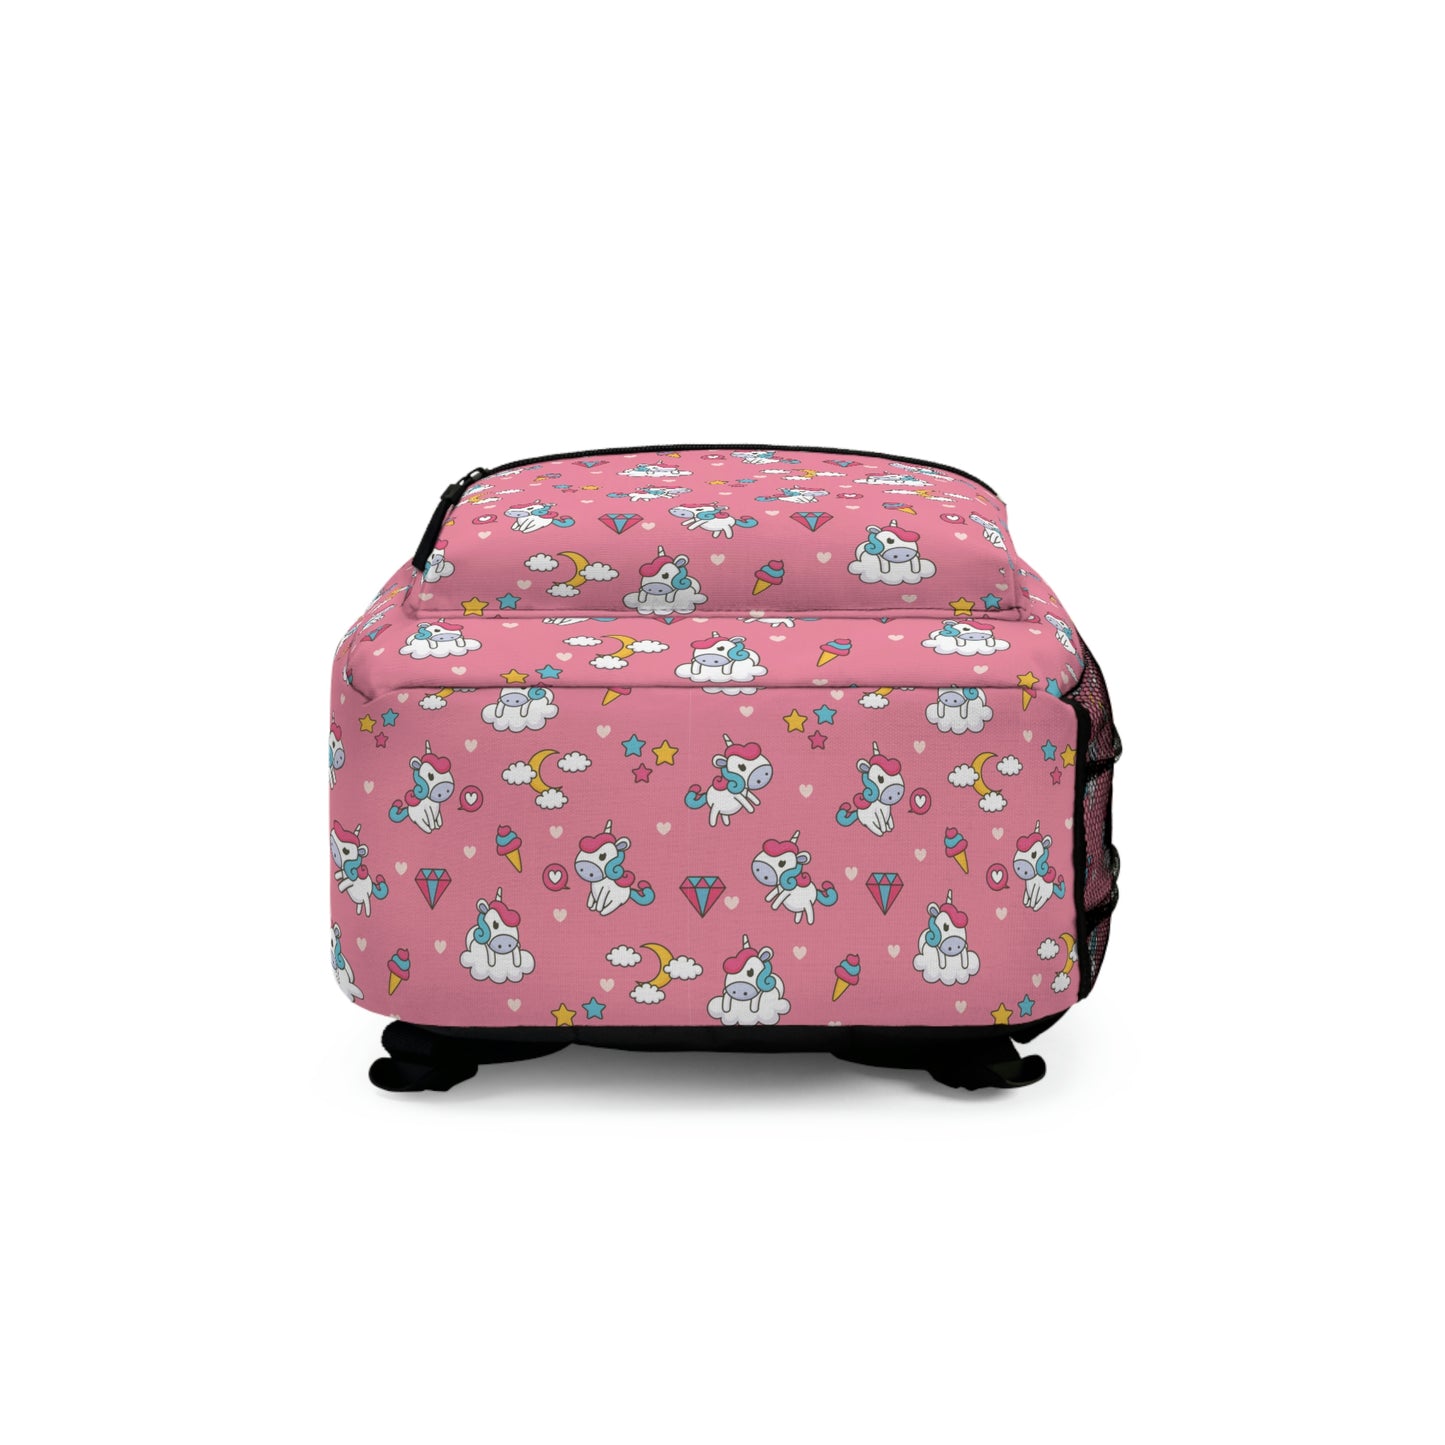 Unicorn pink Backpack